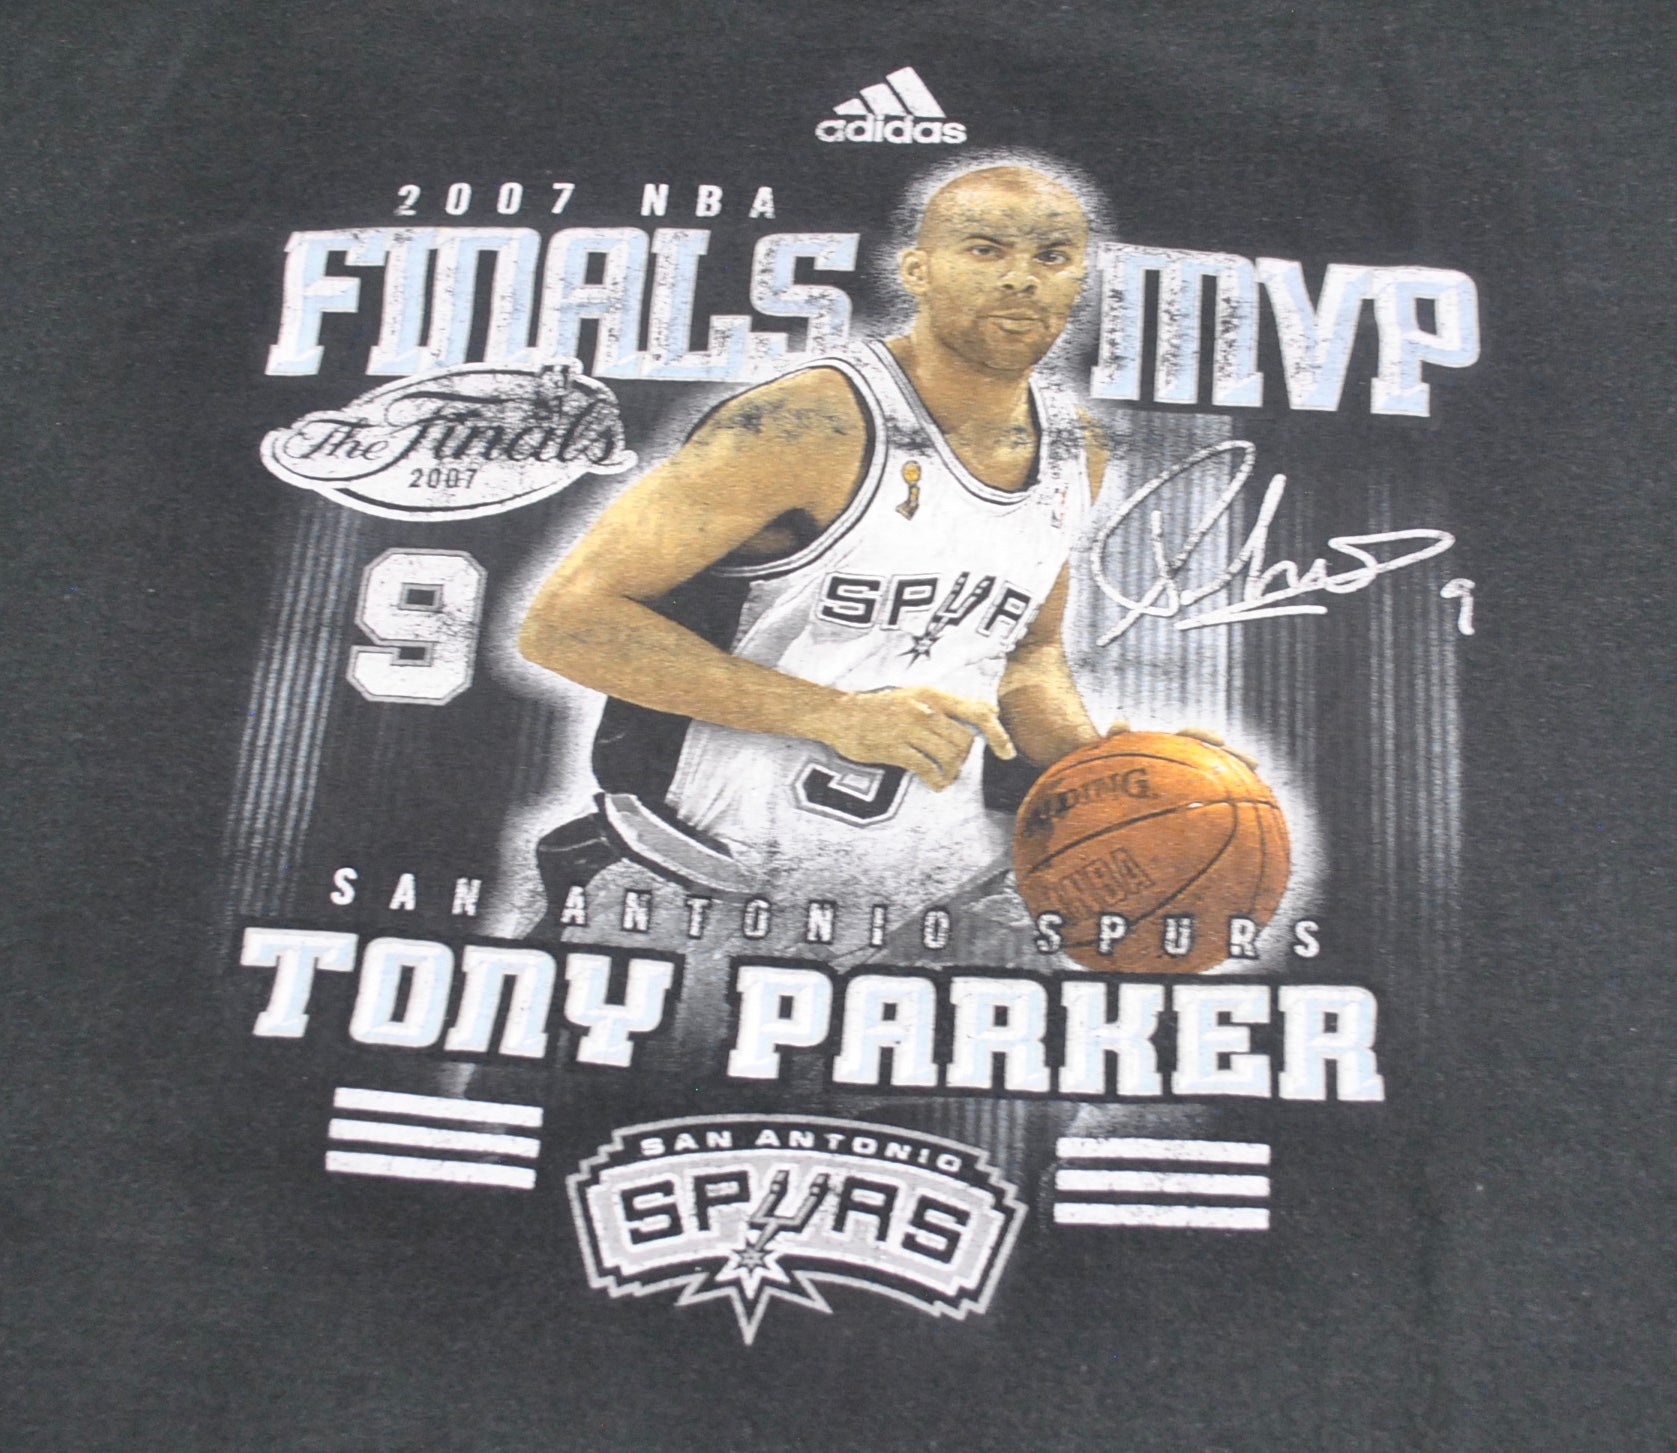 Buy Tony Parker's San Antonio Spurs jersey